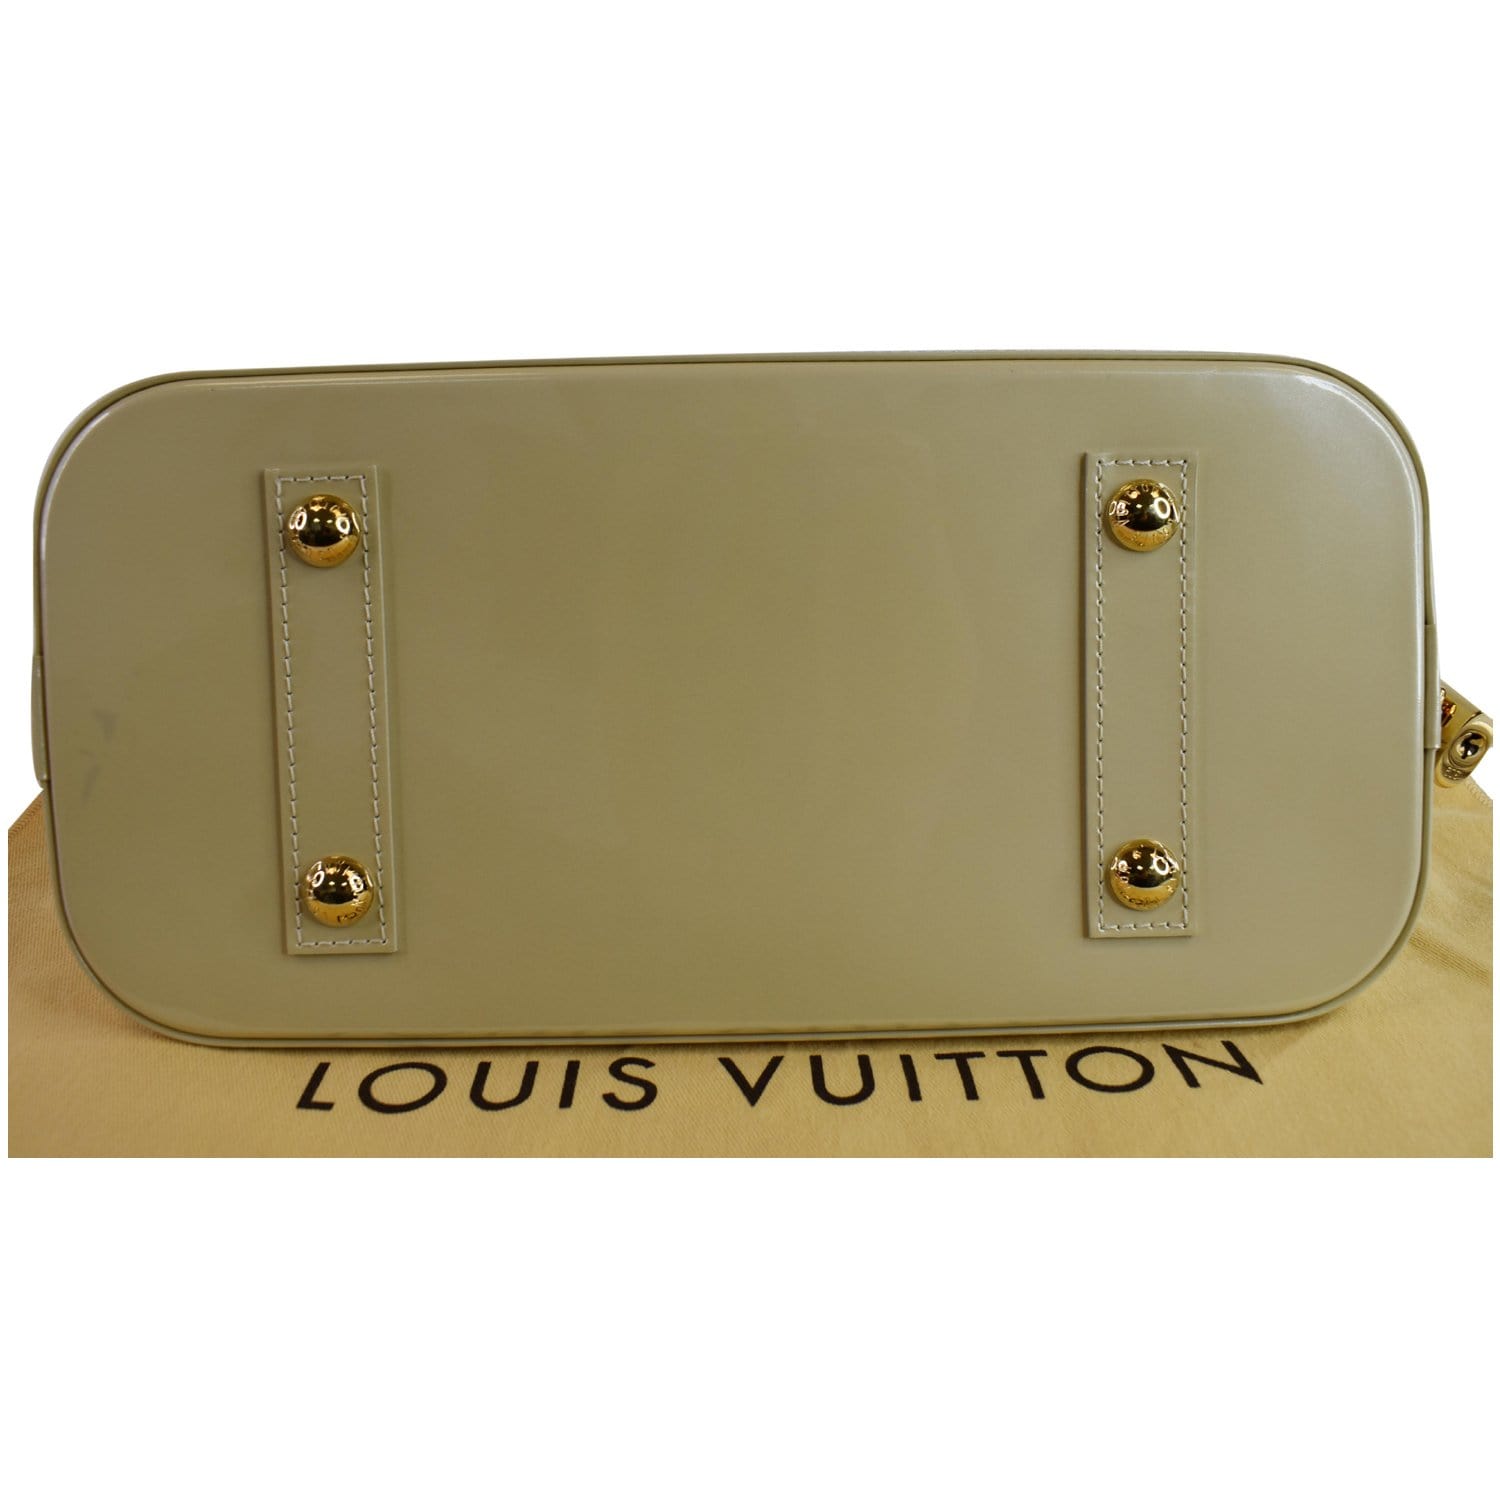 PRELOVED Louis Vuitton Tan Vernis Monogram Vernis Alma PM Bag FL2113 0 –  KimmieBBags LLC